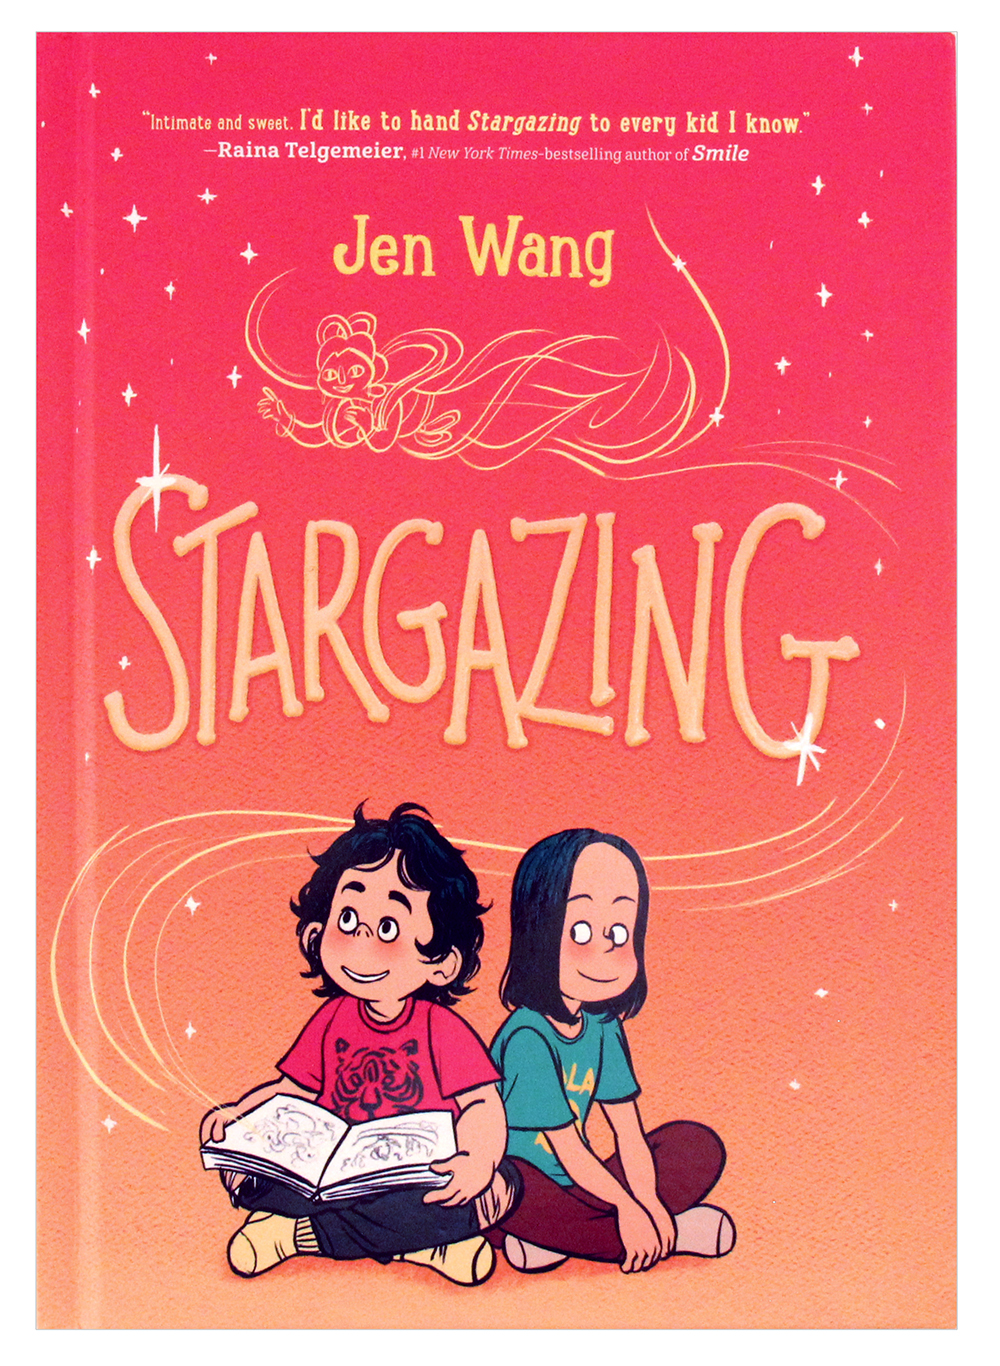 Stargazing, Jen Wang